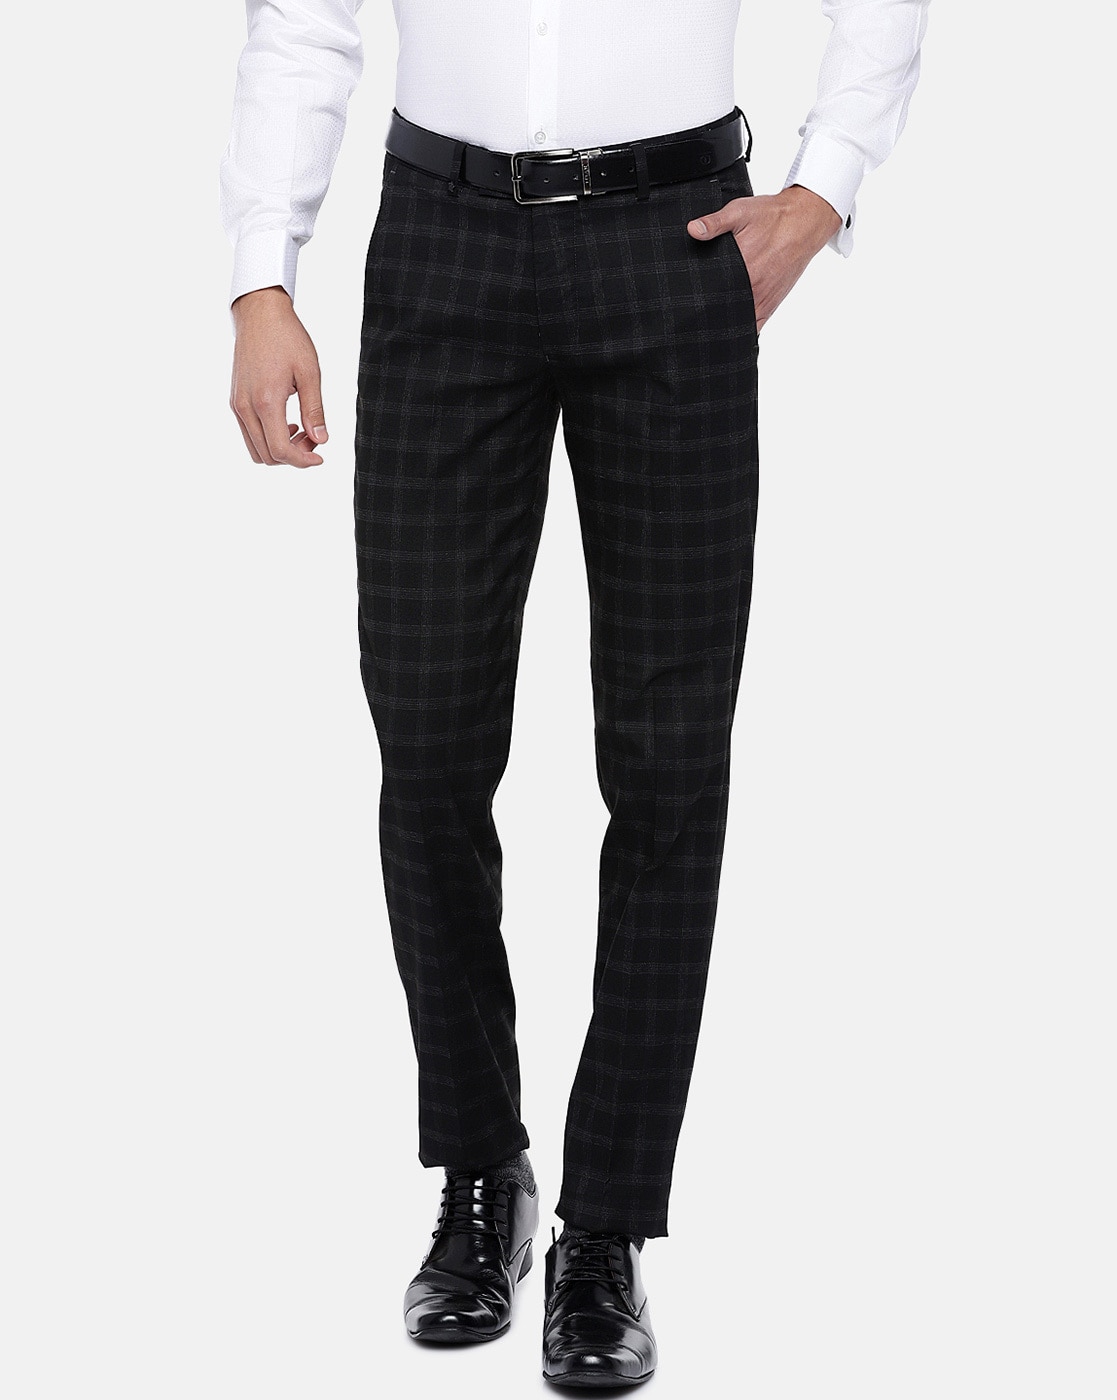 Steve Harvey Striped Double Pleated Gray Suit Pants, $60 | Kohl's |  Lookastic